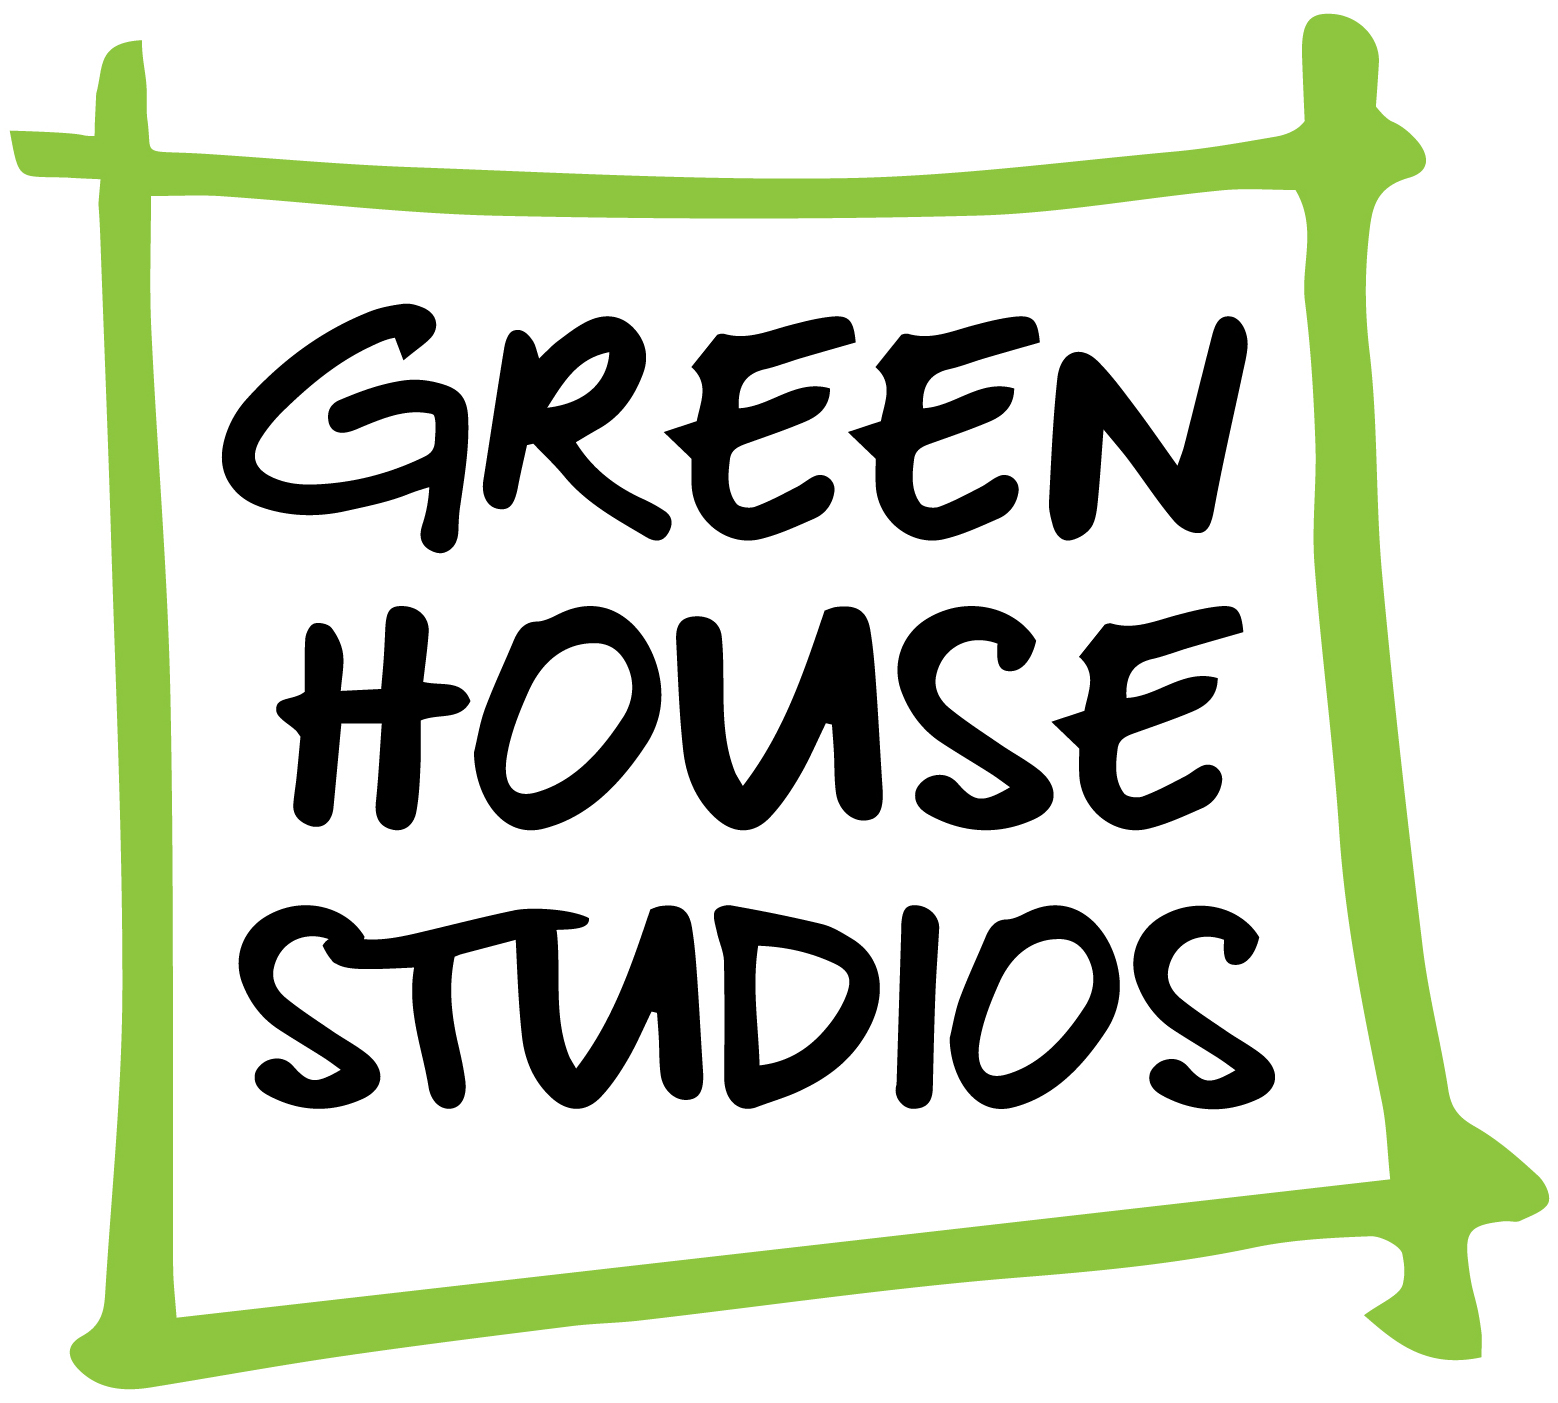 Green House Studios